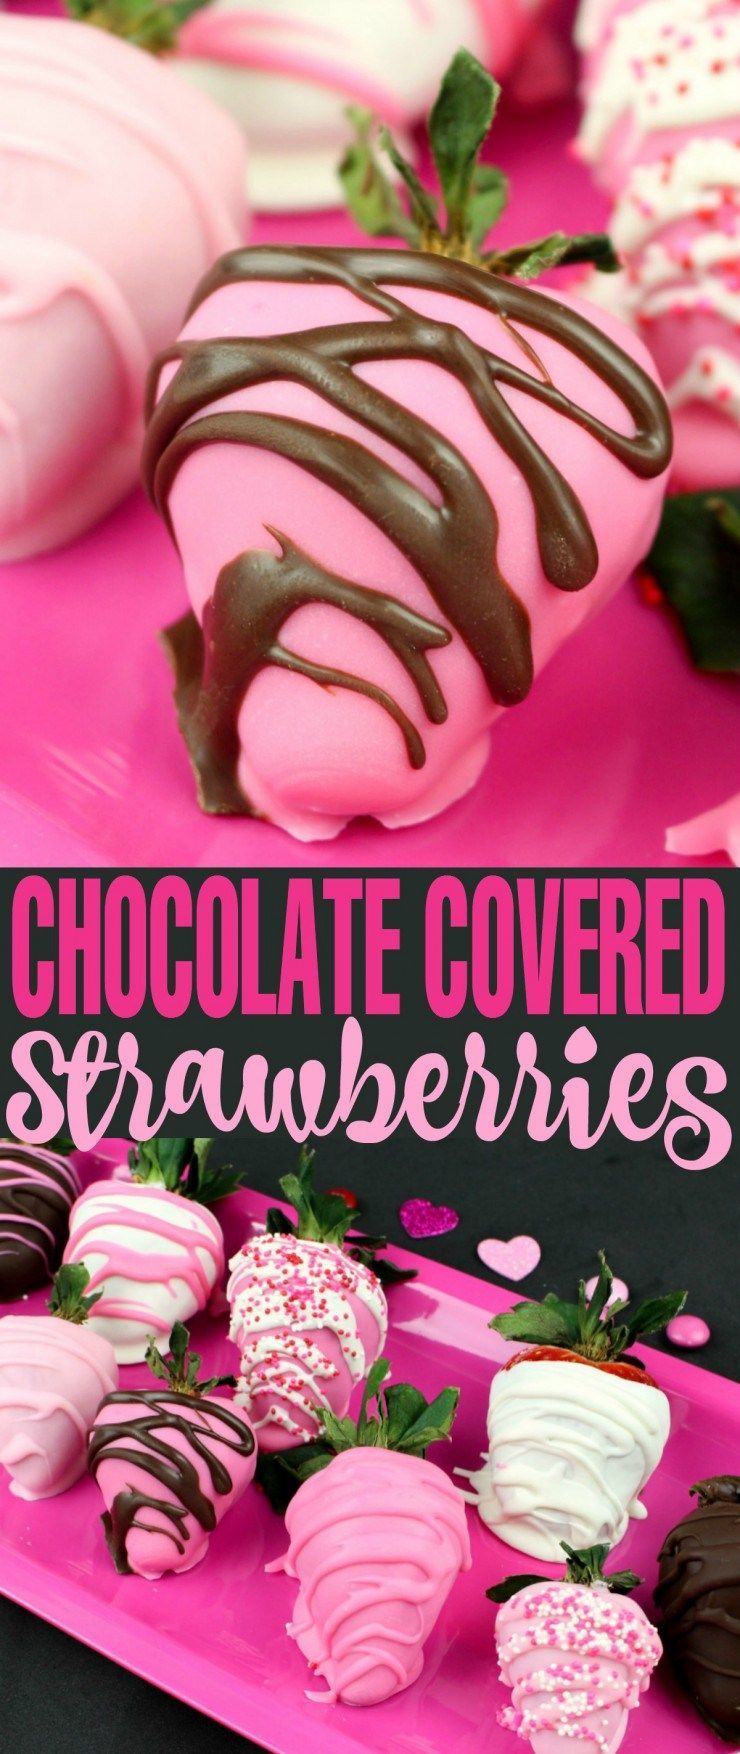 13 desserts Sweets valentines day ideas